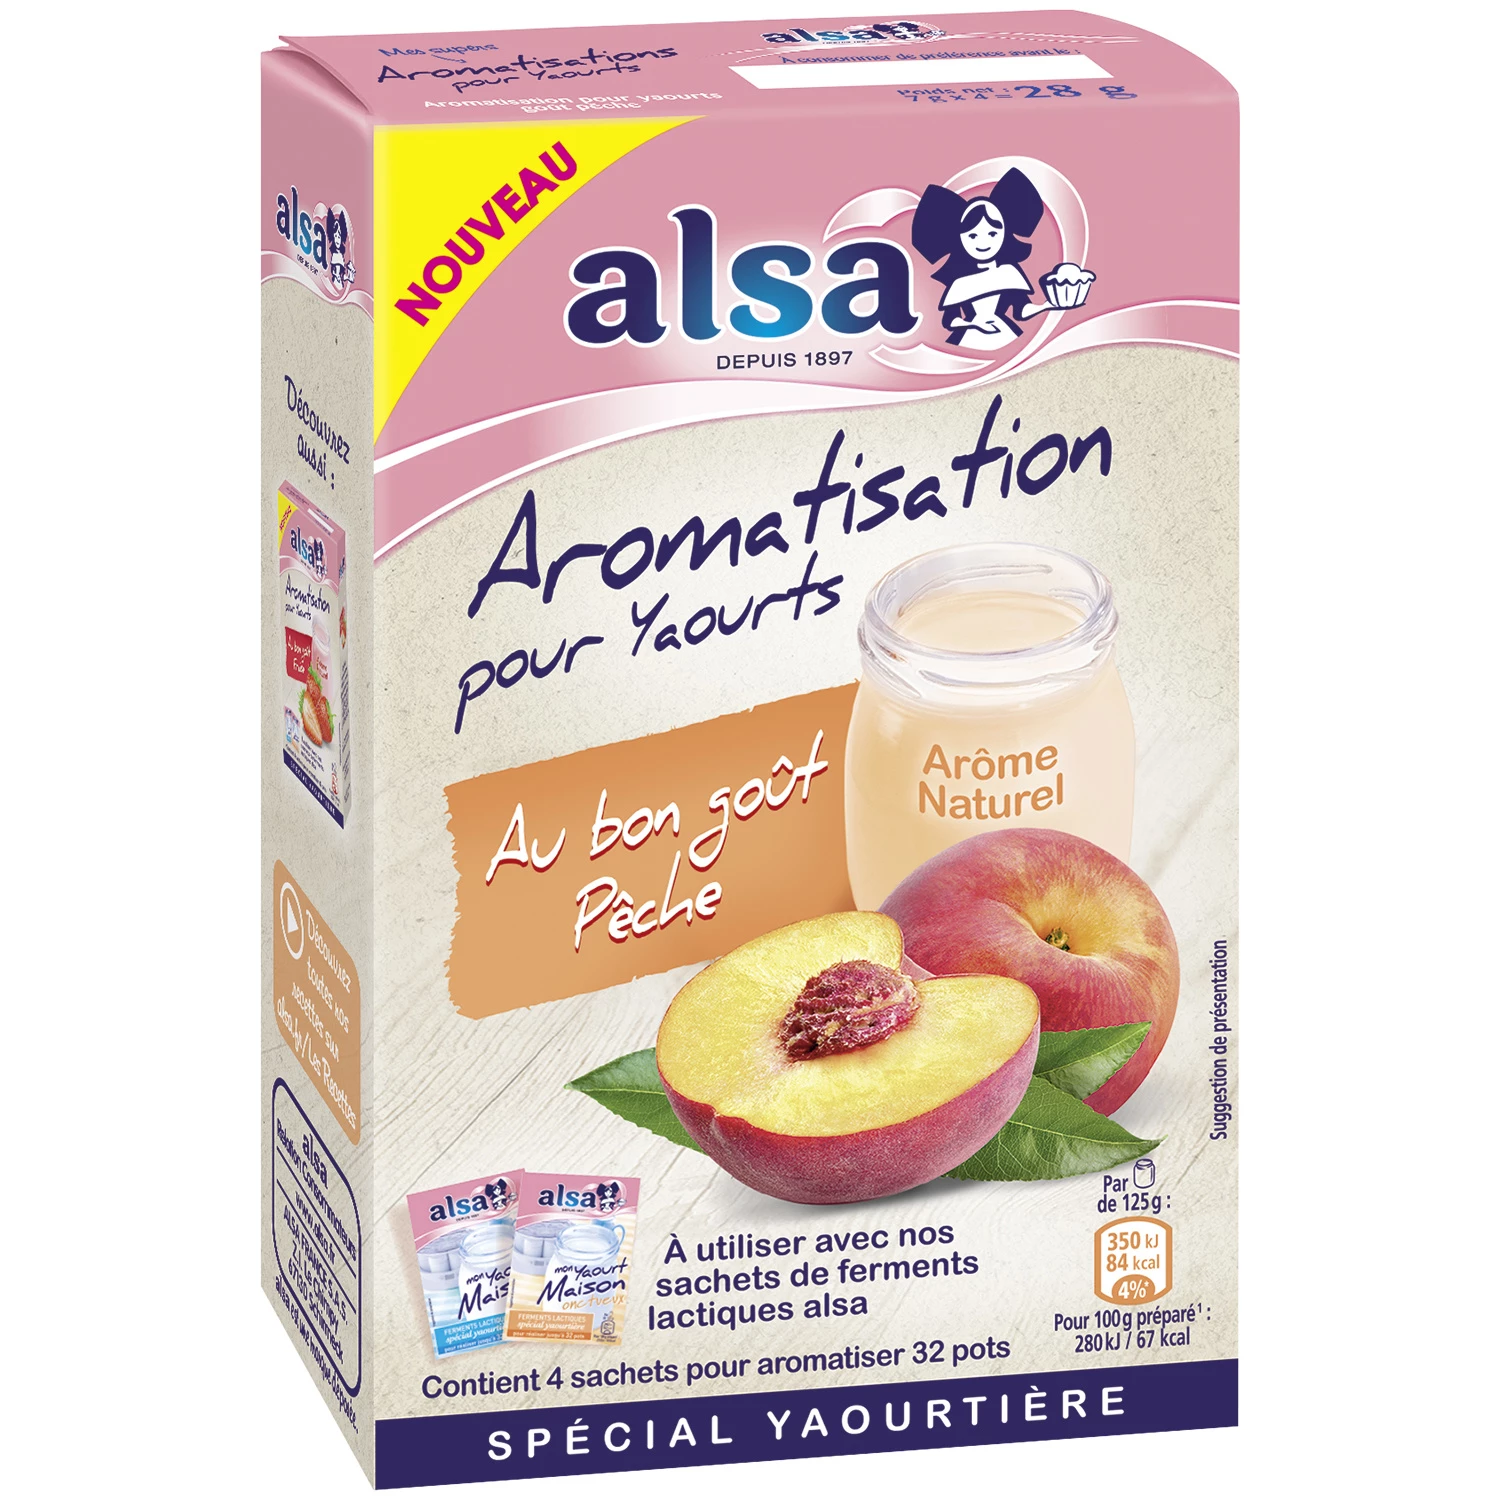 Aromatisation pour Yaourts au goût Pêche, 4x7g - ALSA